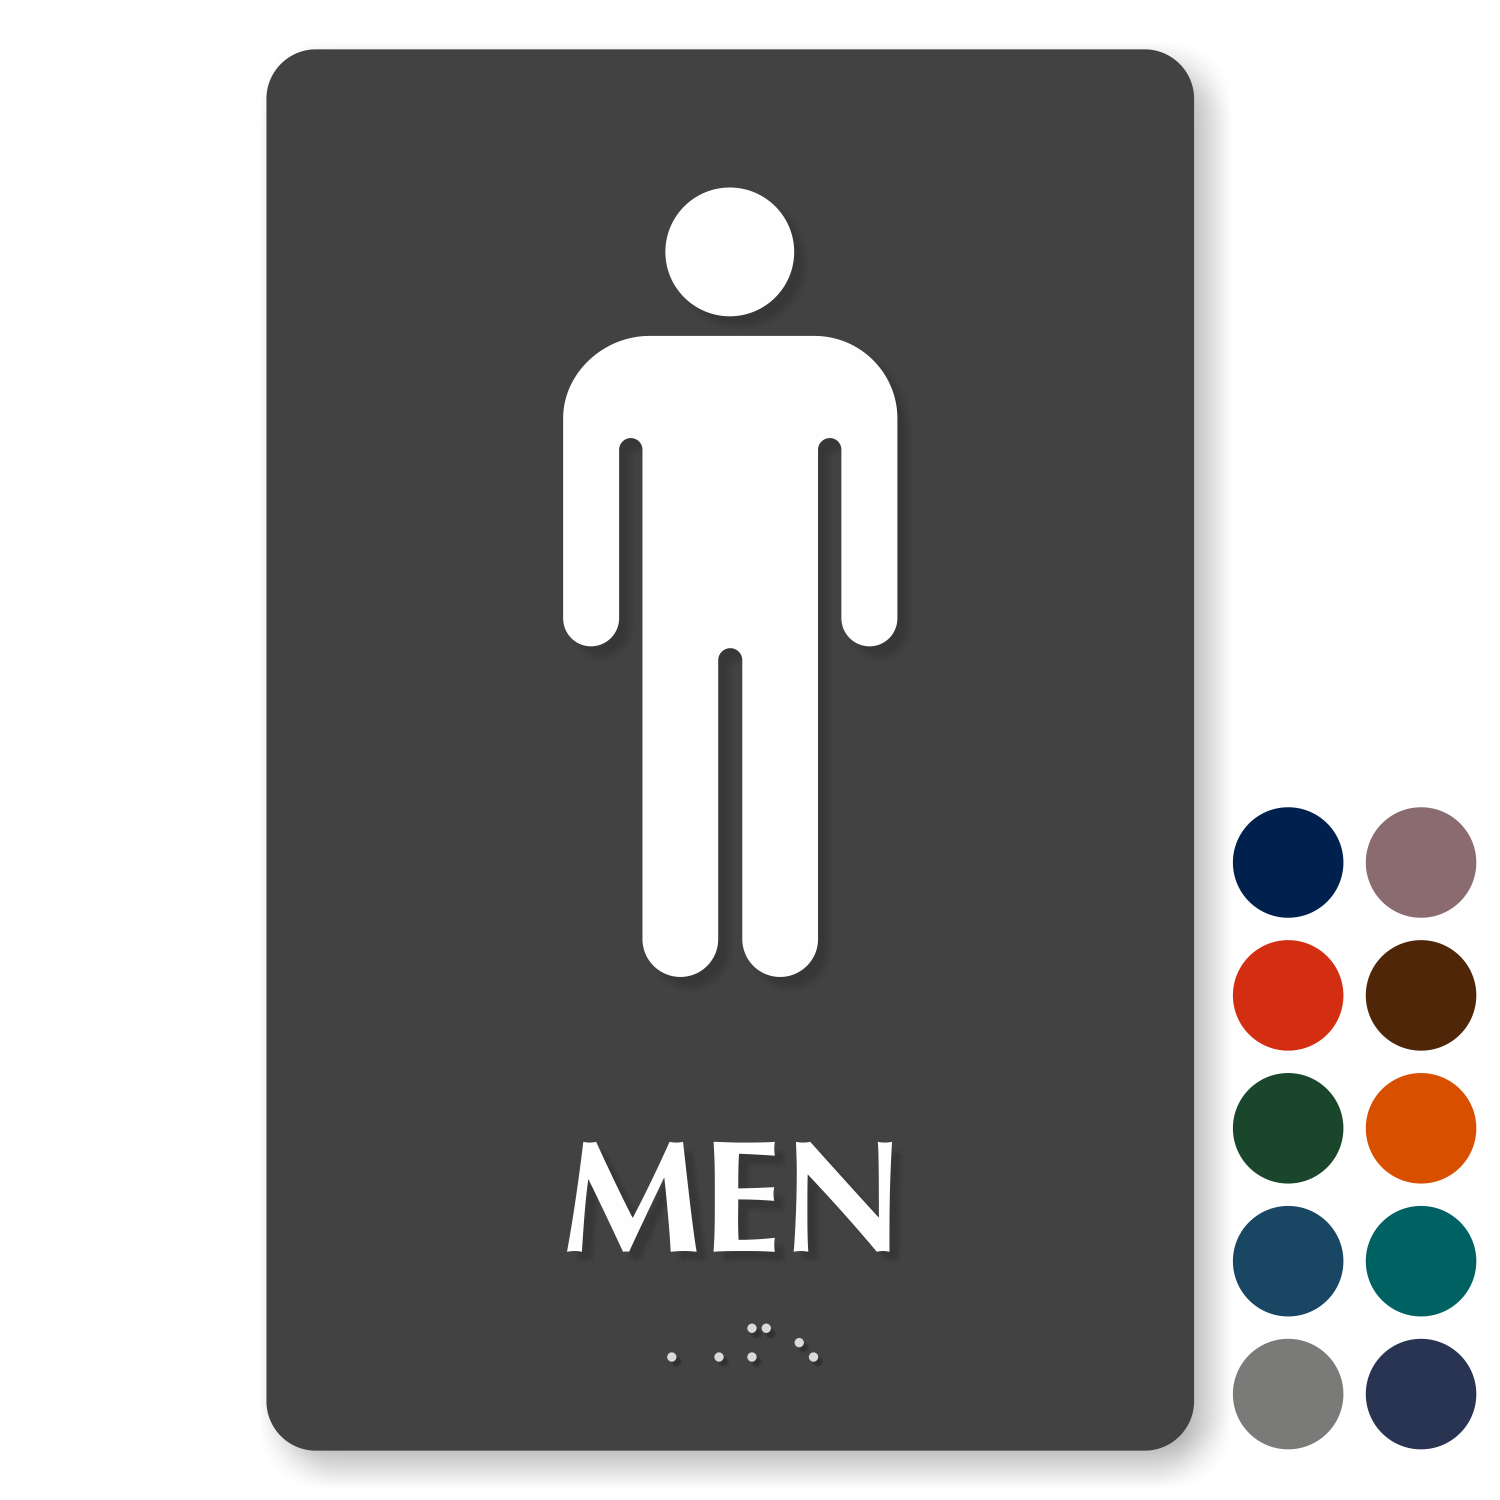 Restroom Signs - 500+ Stock & Custom ADA Bathroom Signs Man And Woman Bathroom Symbol